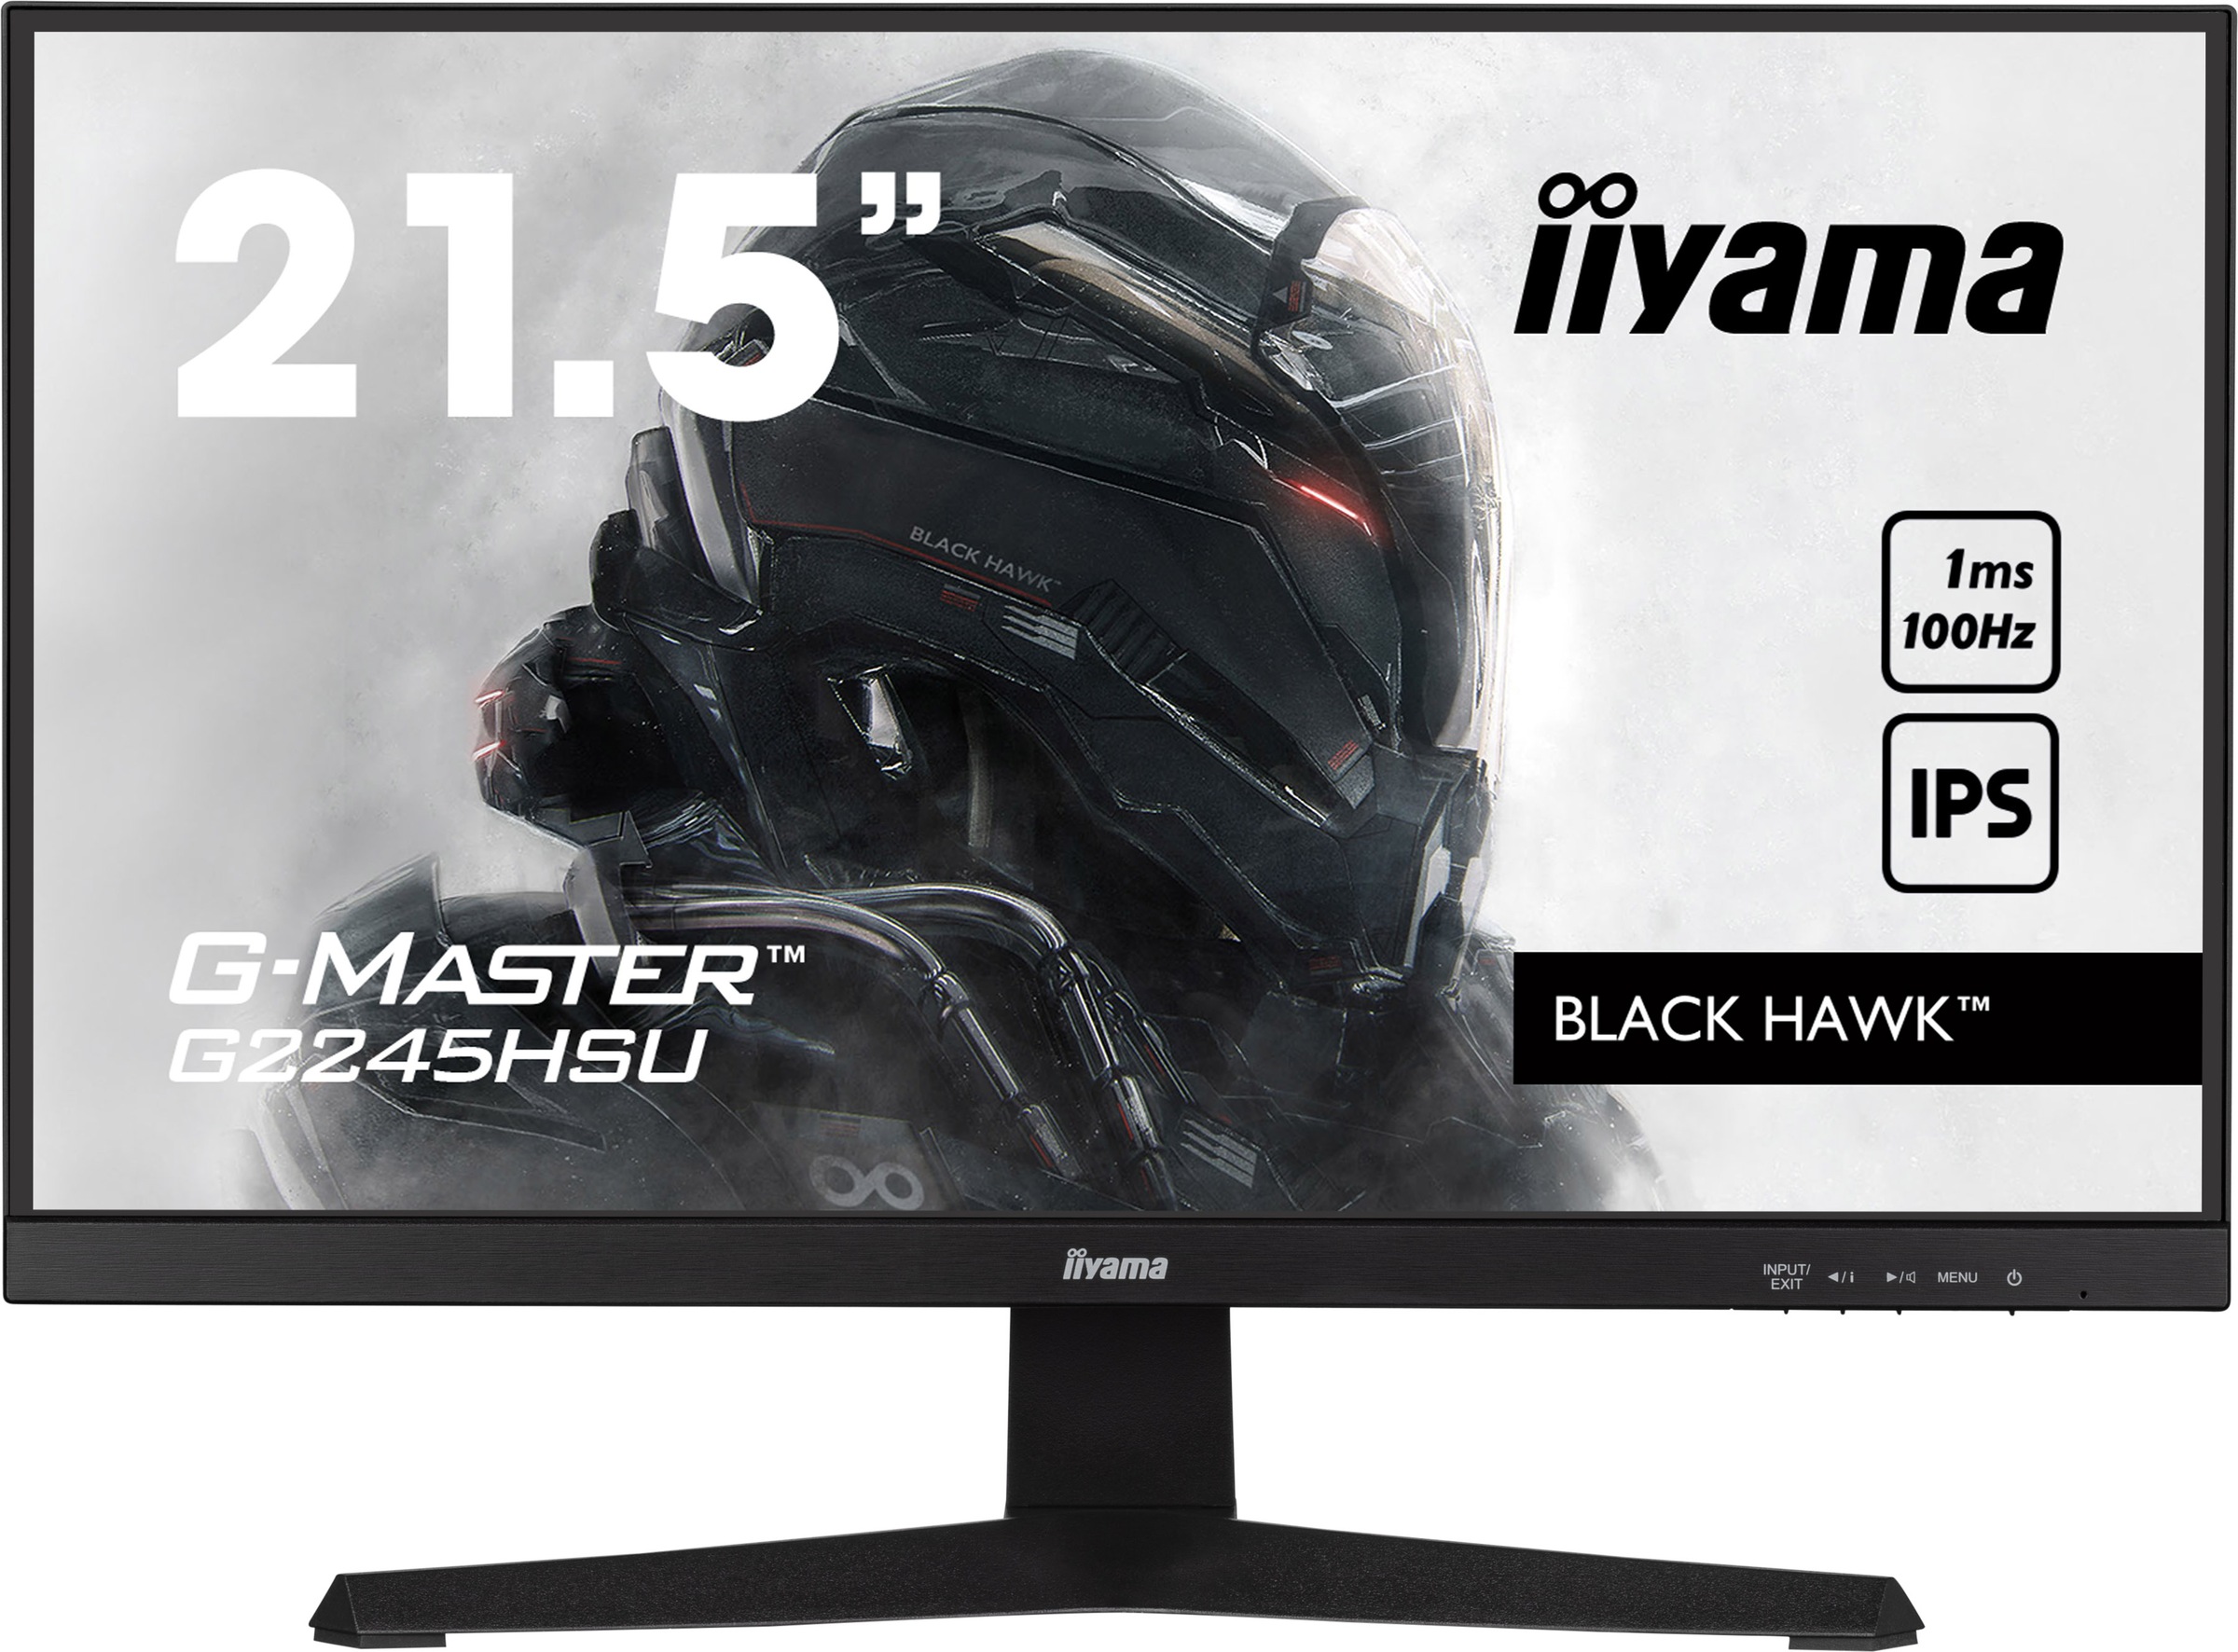 Iiyama Gaming-Monitor »G2245HSU-B1«, 54,5 cm/21 Zoll, 1920 x 1080 px, Full HD, 1 ms Reaktionszeit, 100 Hz